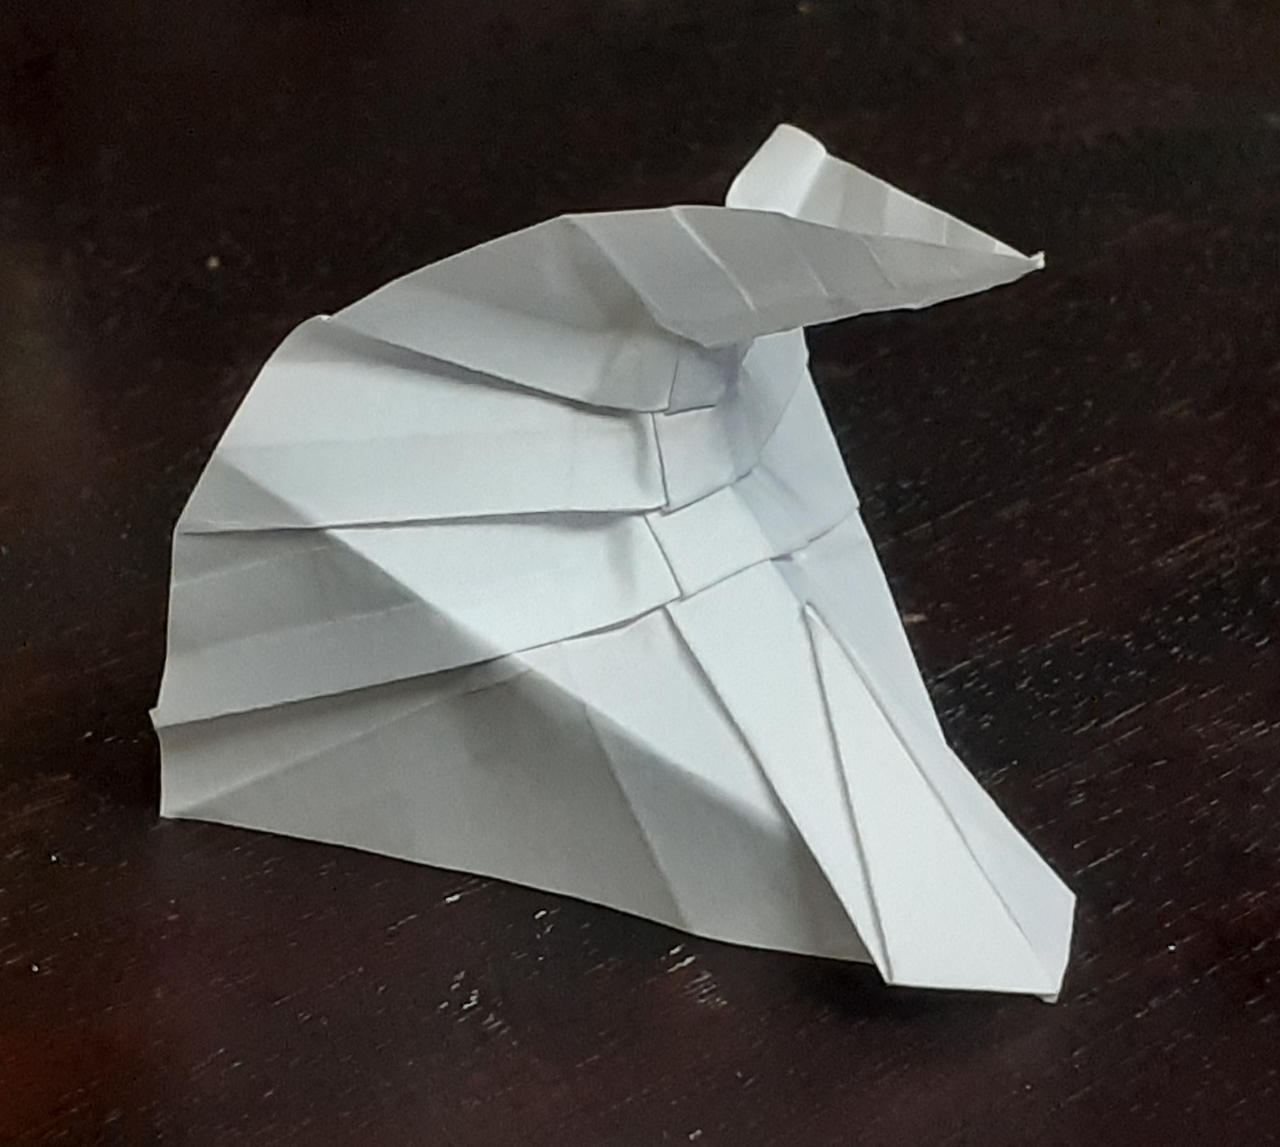 Origami: Paper Folding Art by ekortal on DeviantArt